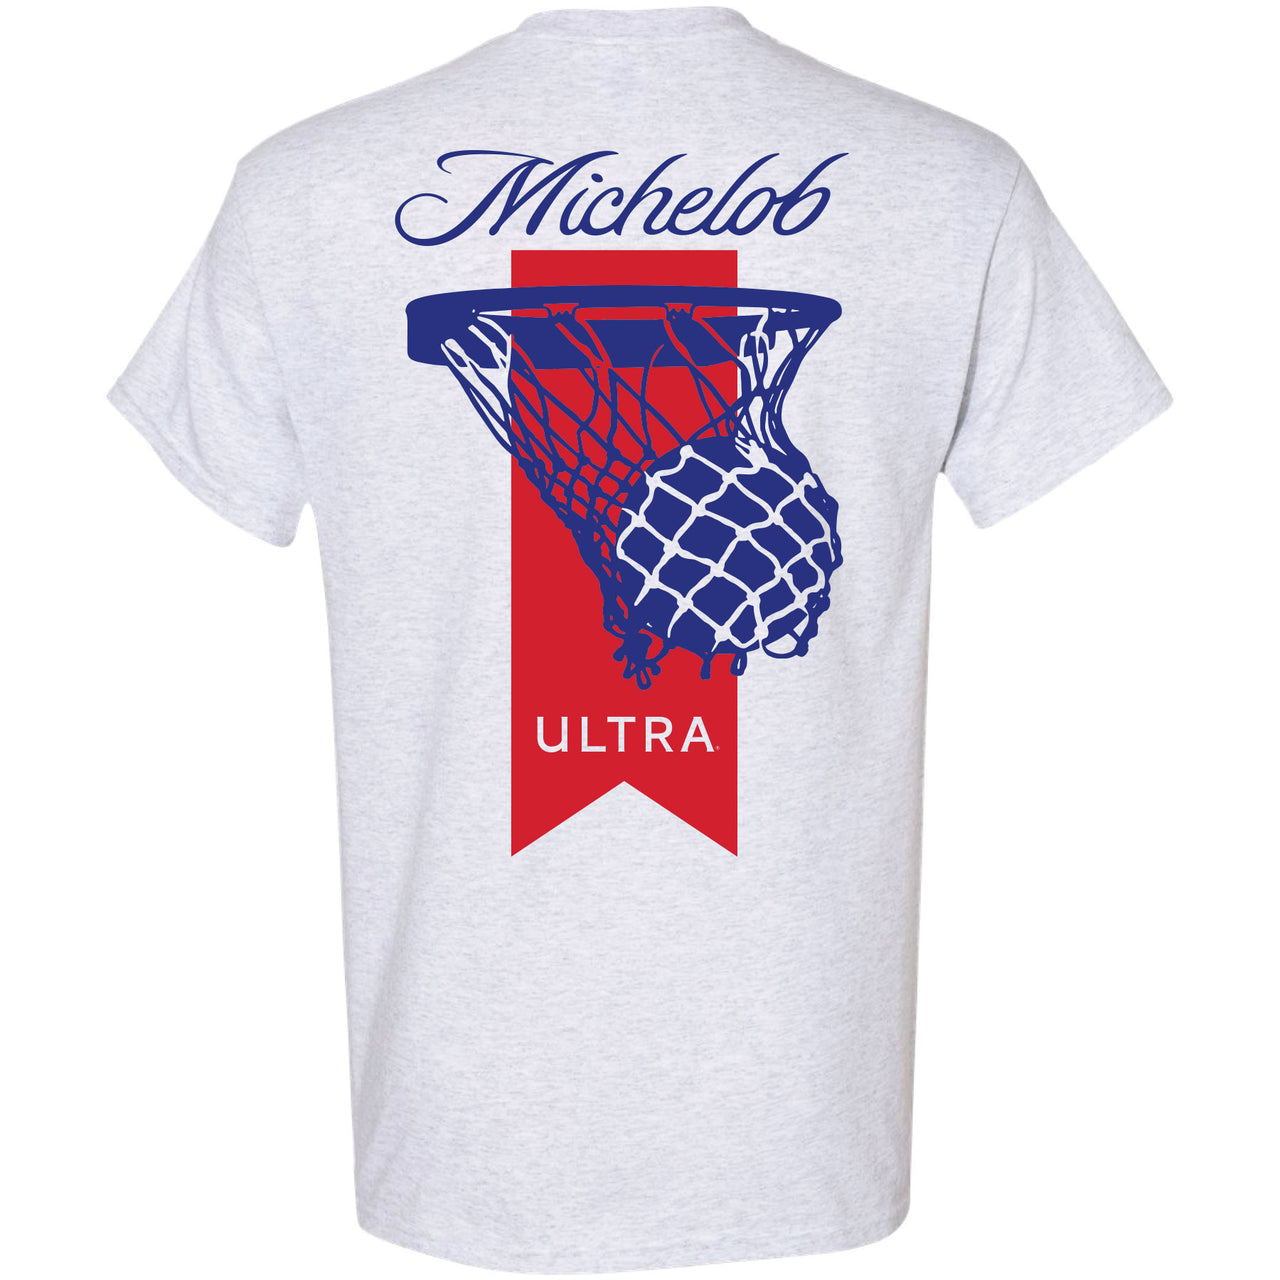 Michelob Swish 2-Sided T-Shirt